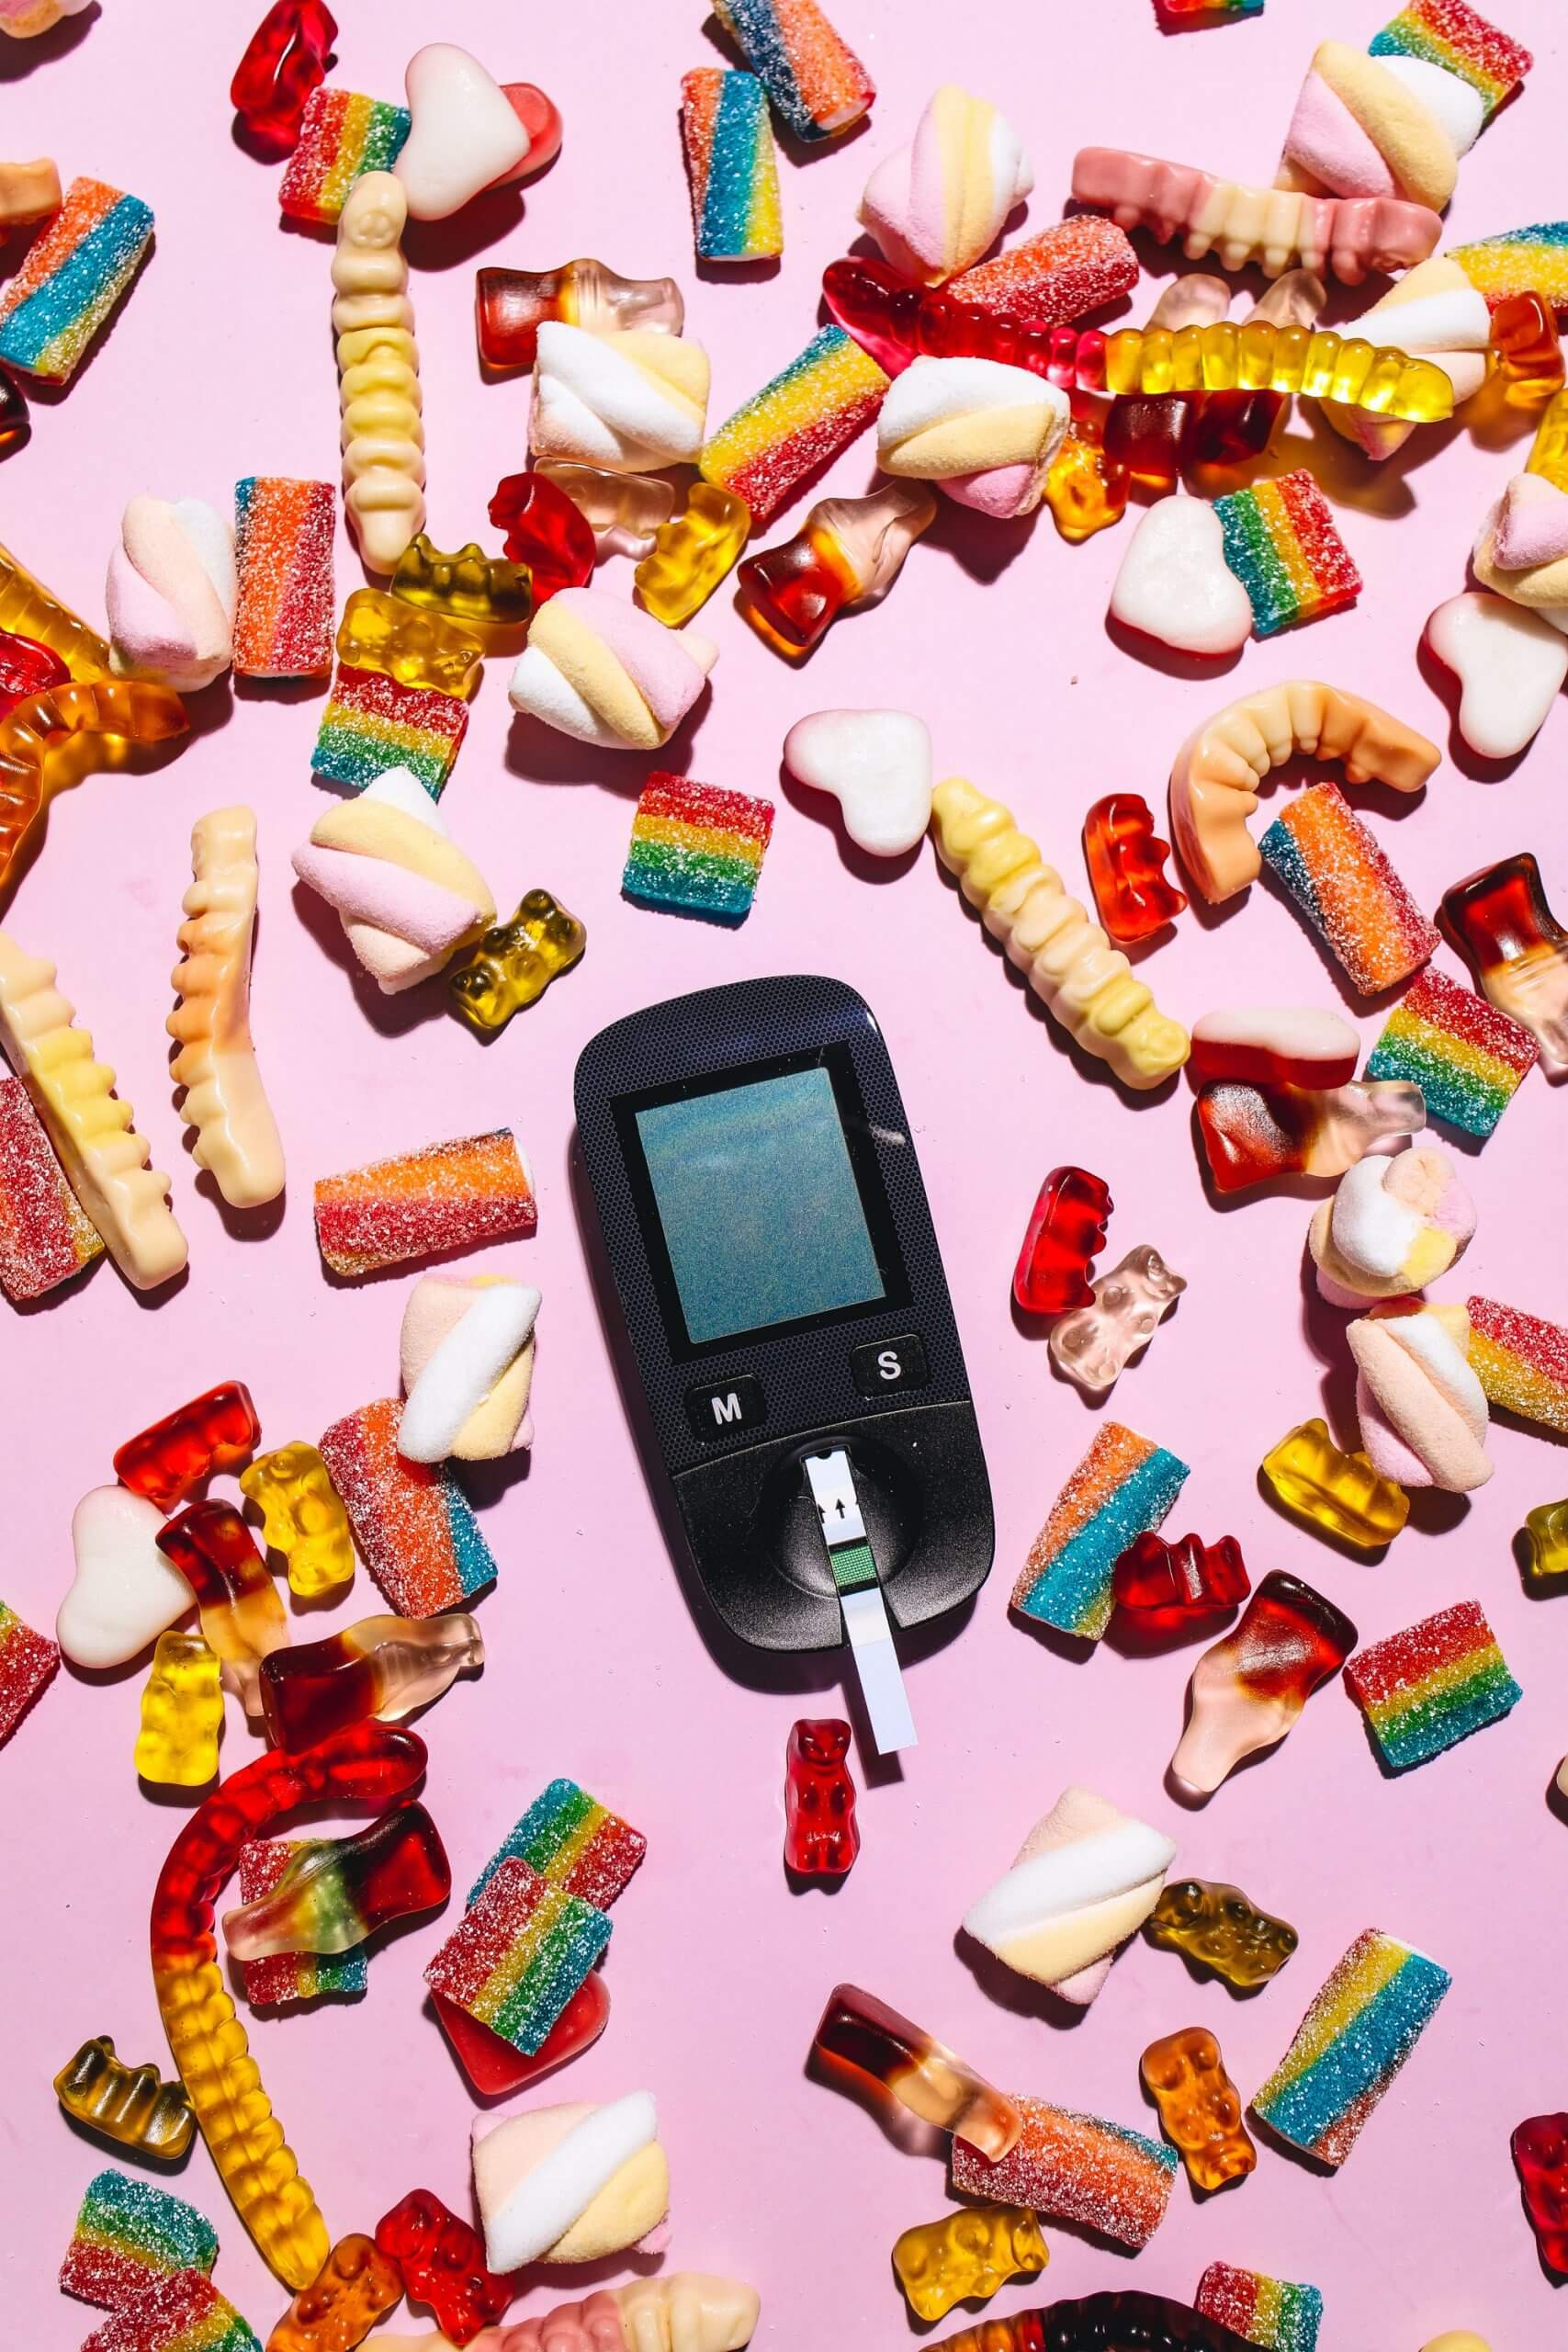 Diabetes: Can You Cure Diabetes?